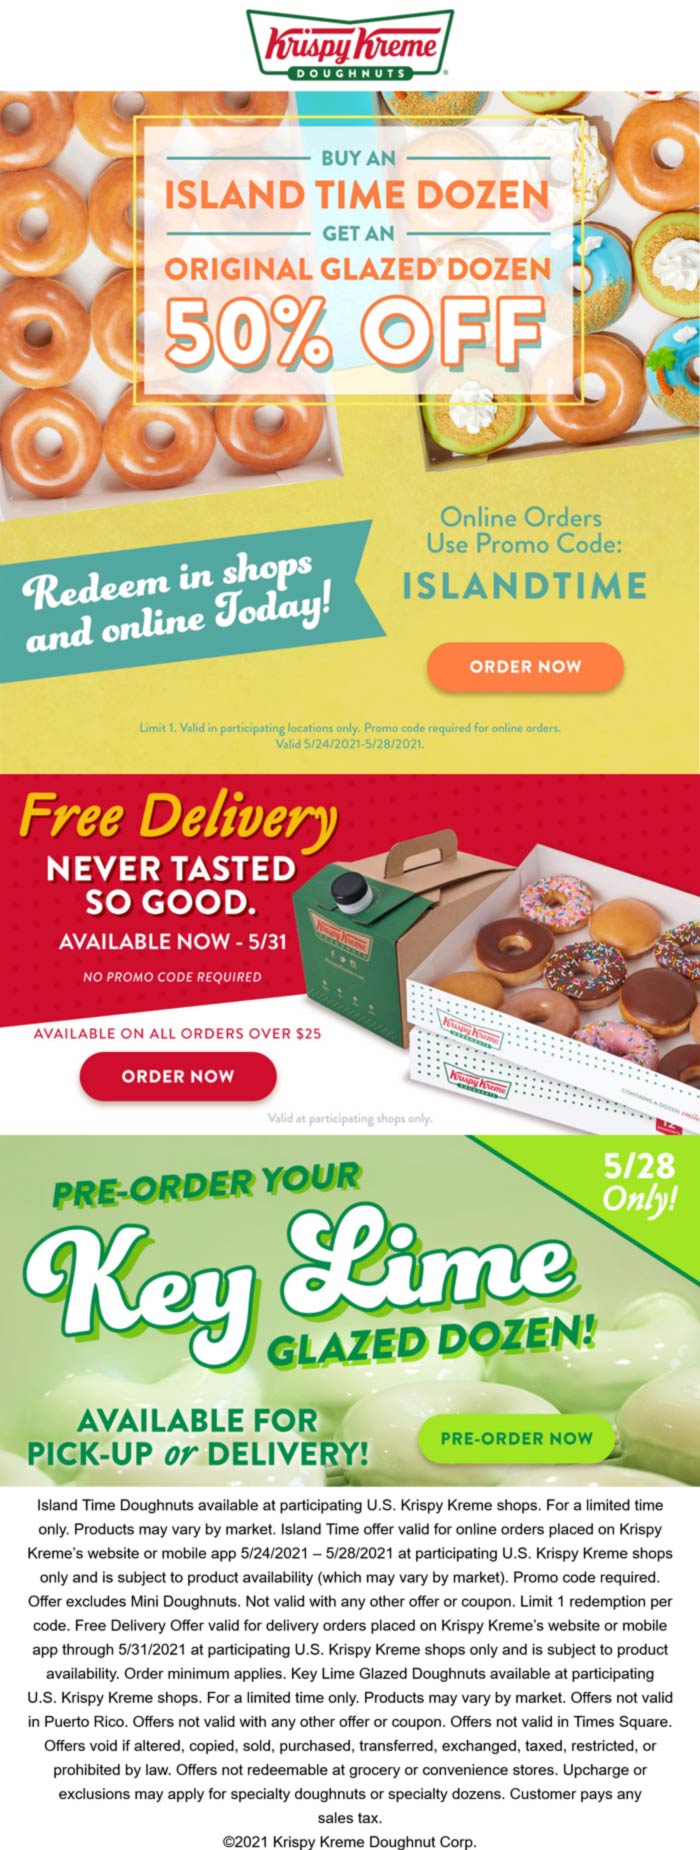 Krispy Kreme stores Coupon  Glazed dozen 50% off with your island dozen at Krispy Kreme, or online via promo code ISLANDTIME #krispykreme 